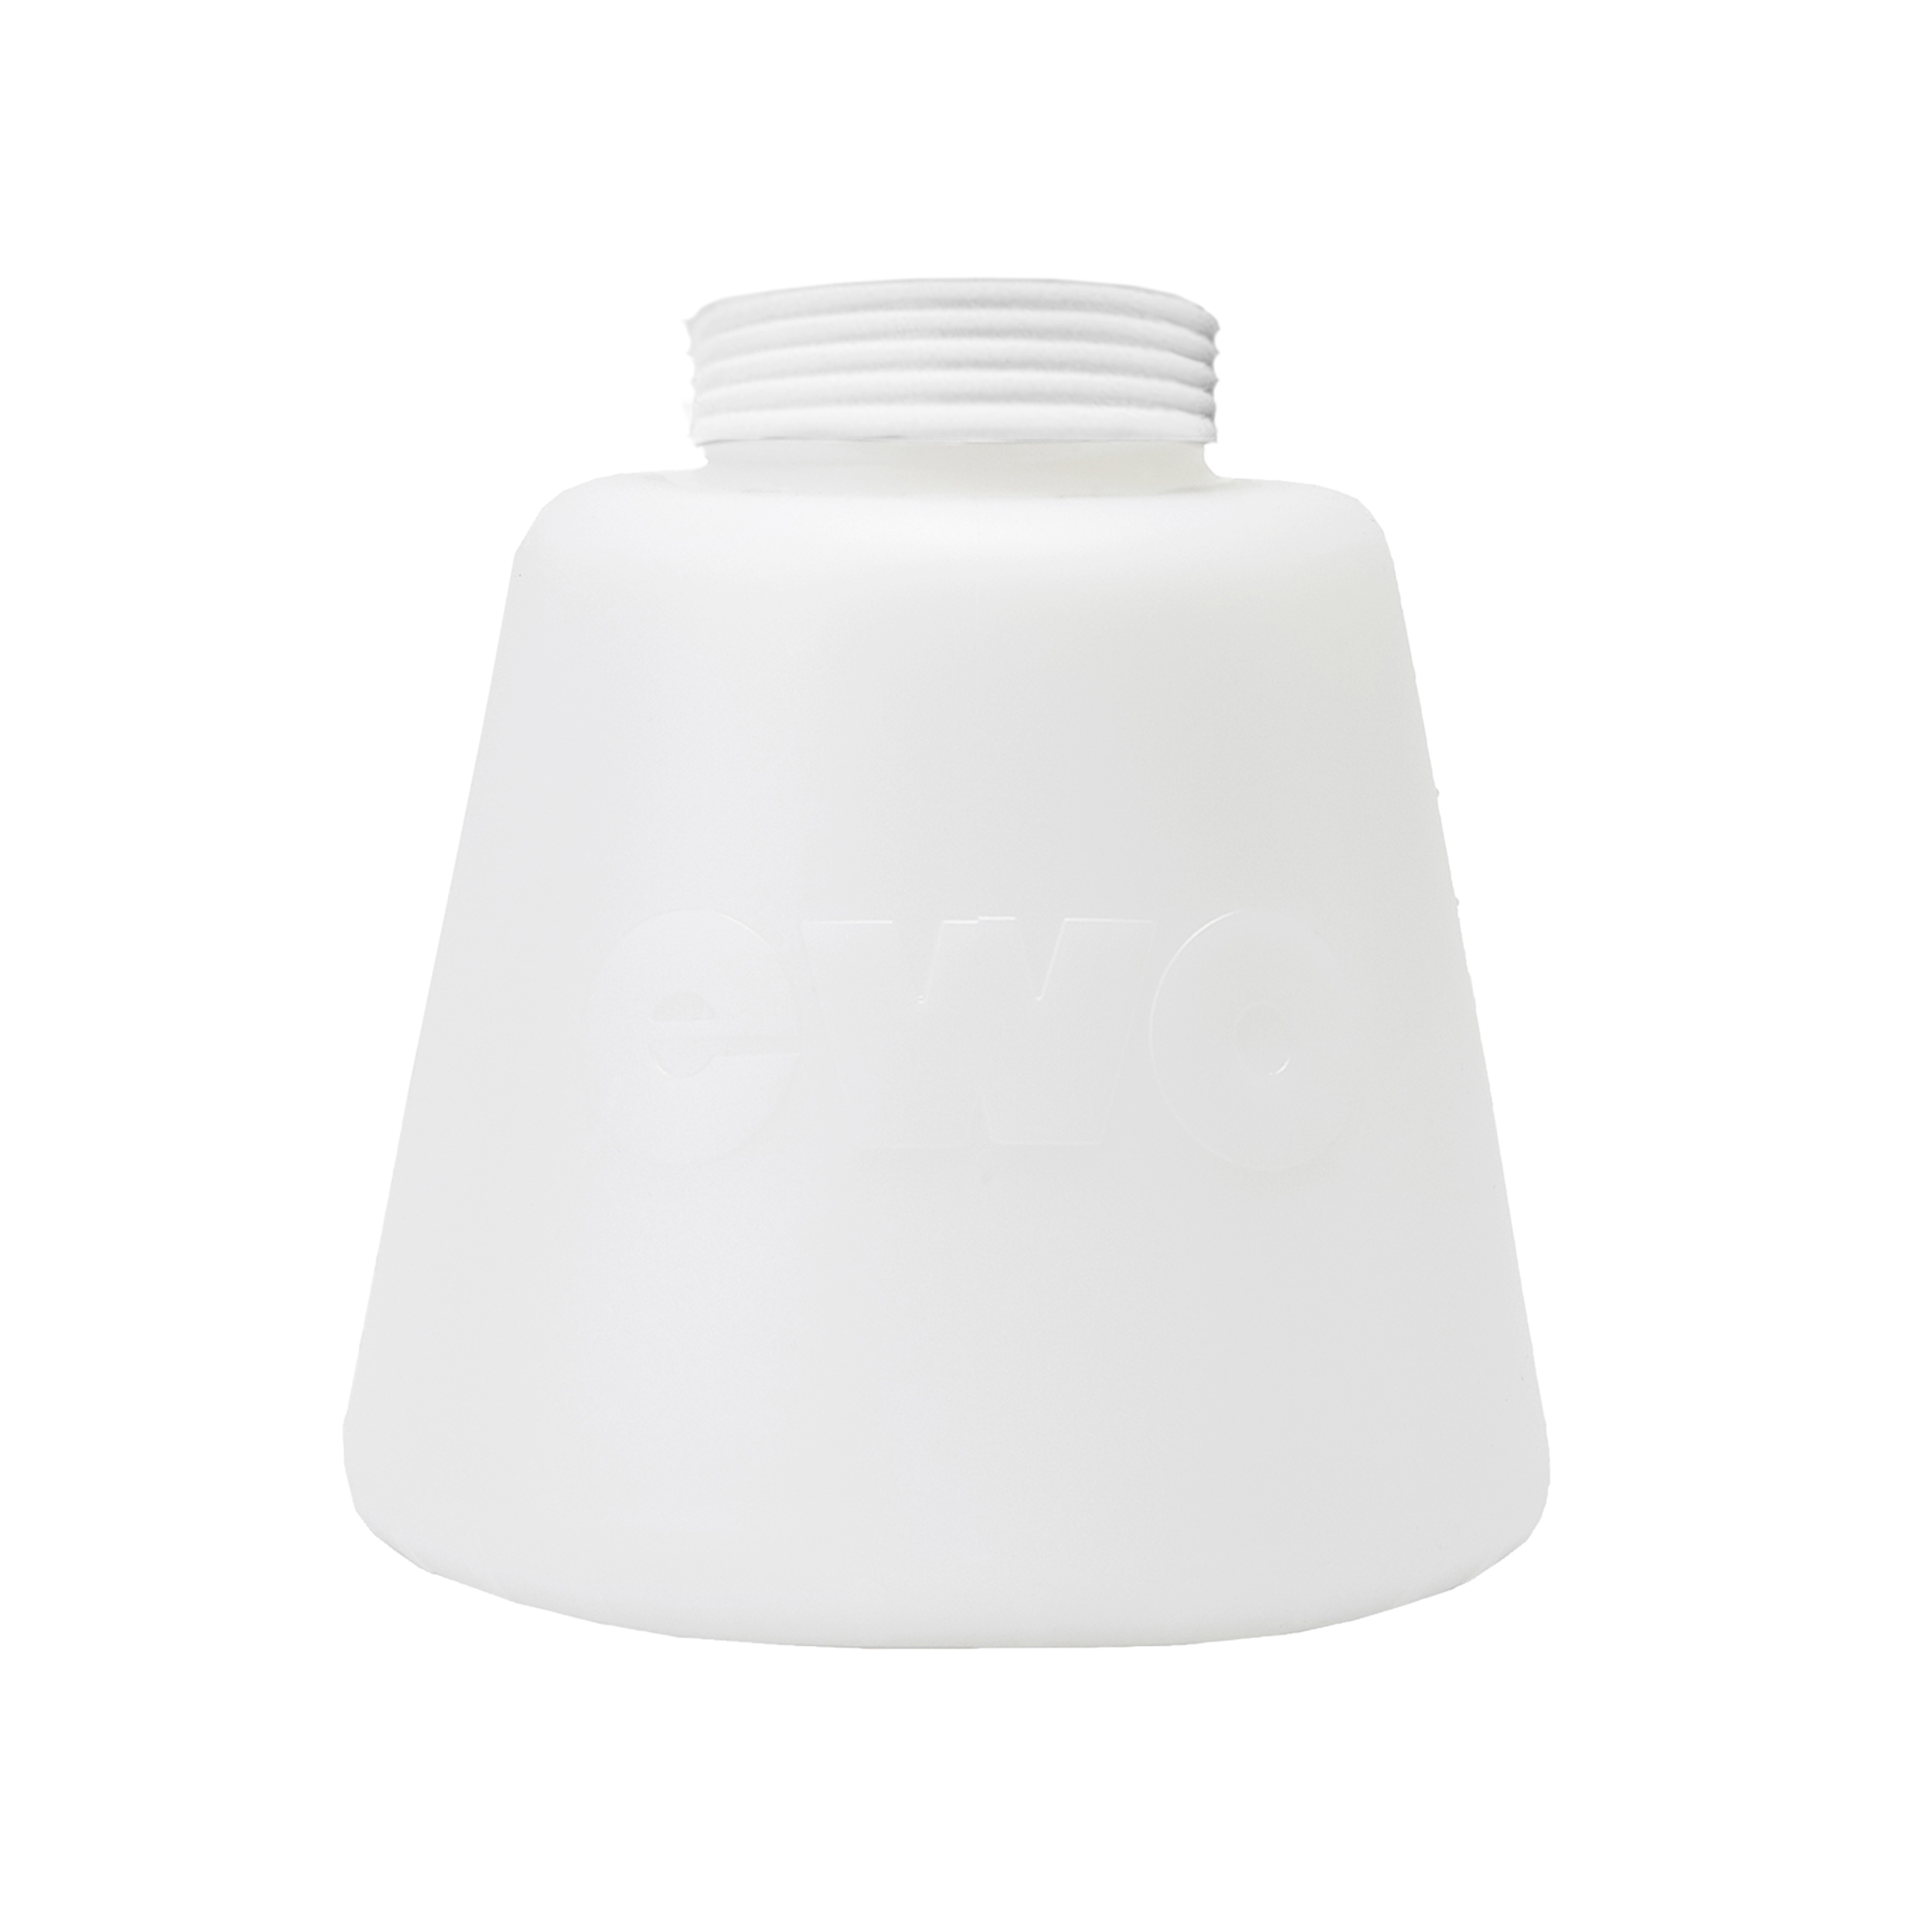 Bowl 1 liter, white-opaque, material: HDPE (High Density Polyethylen), with ewo logo